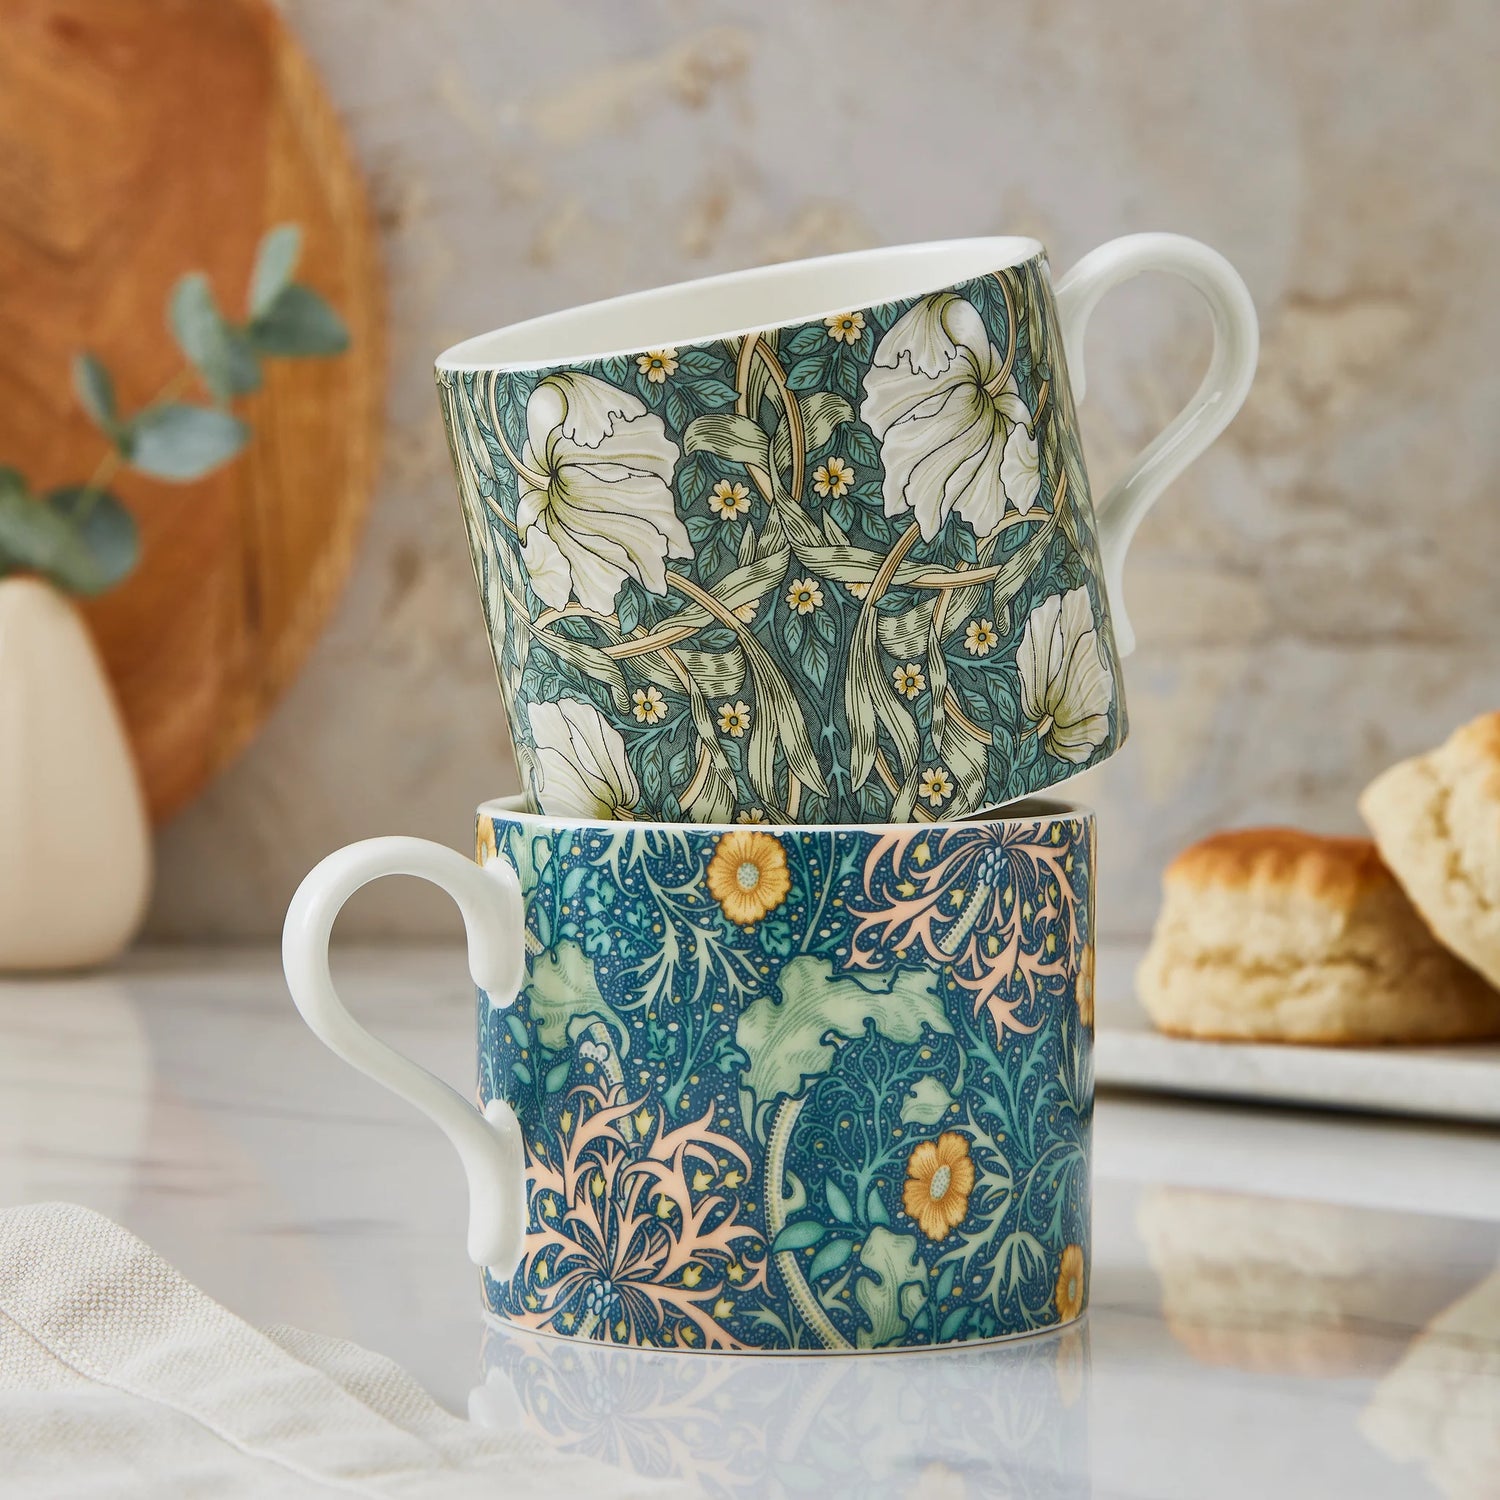 designer mugs for sale uk